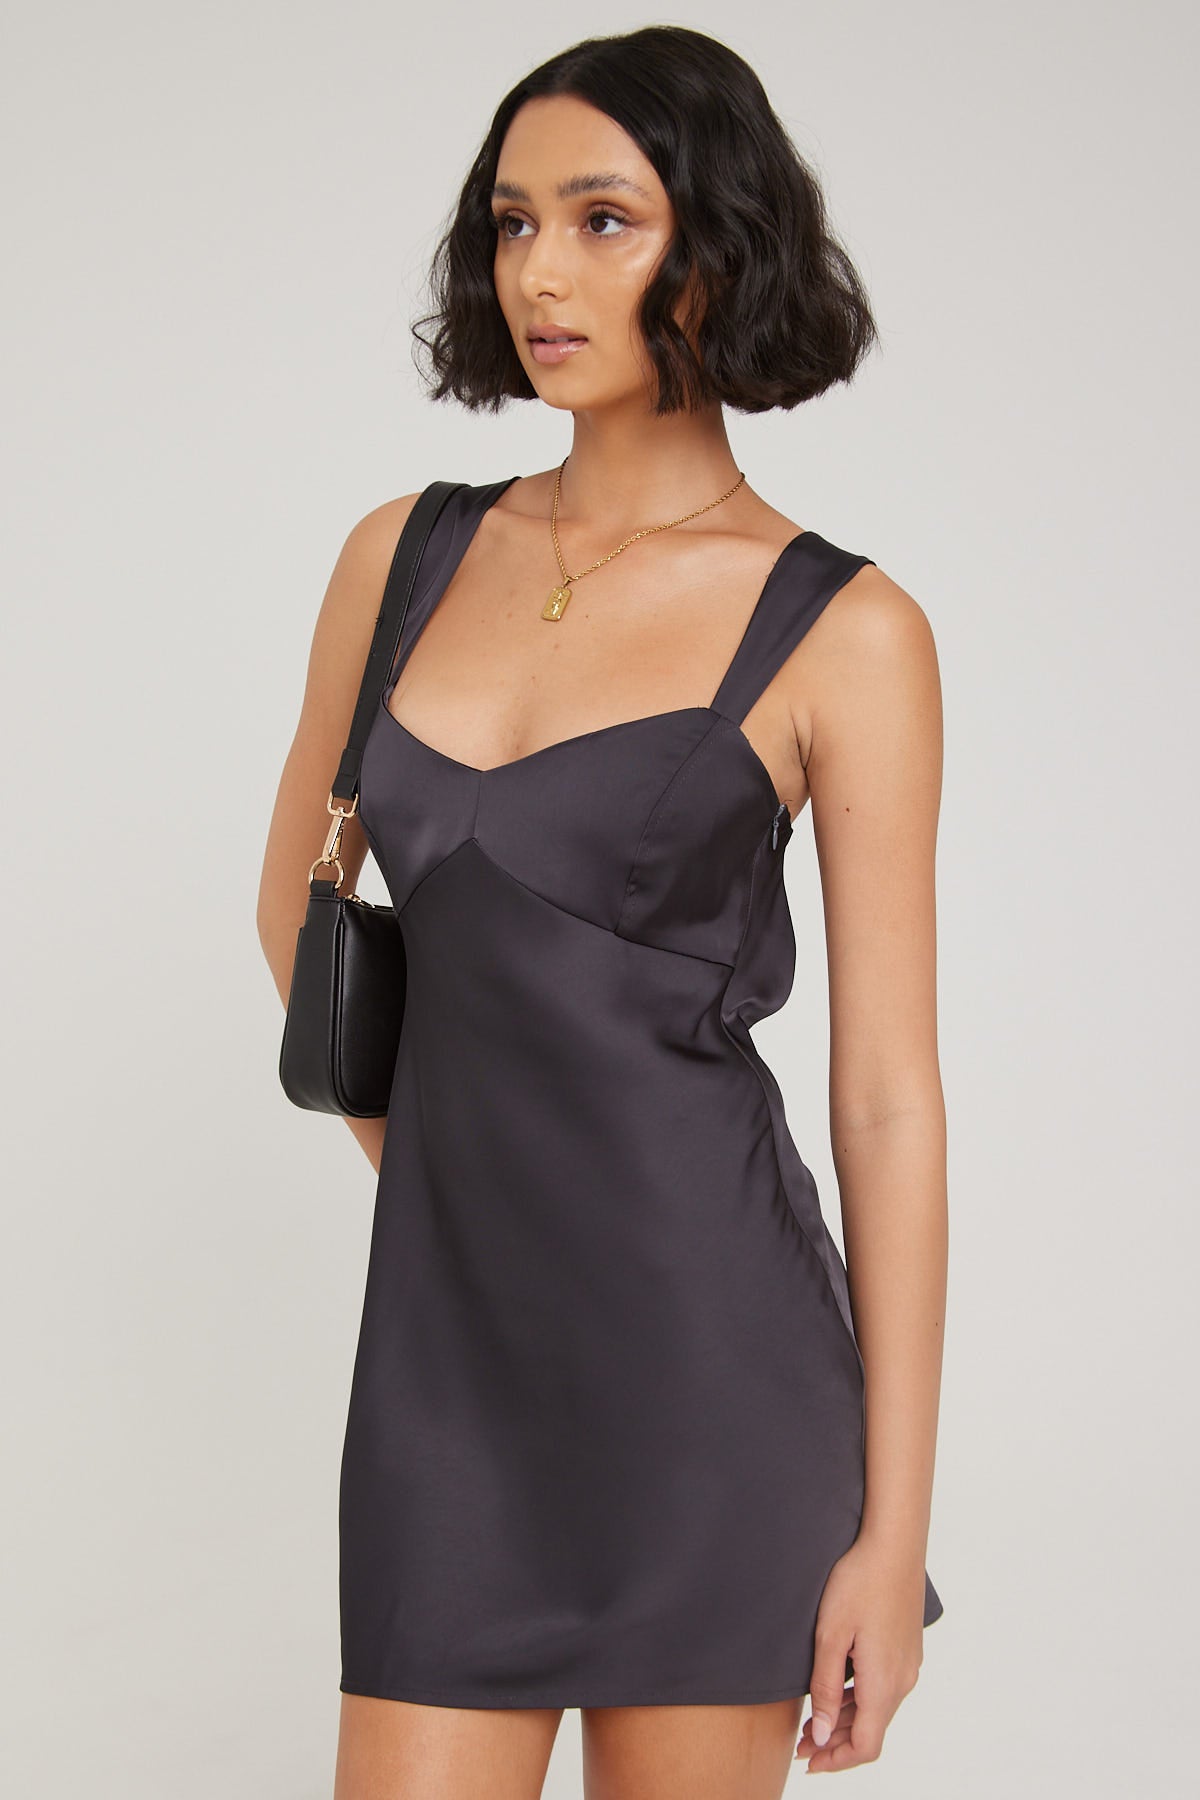 Luck & Trouble Caprice Satin Mini Dress Charcoal – Universal Store